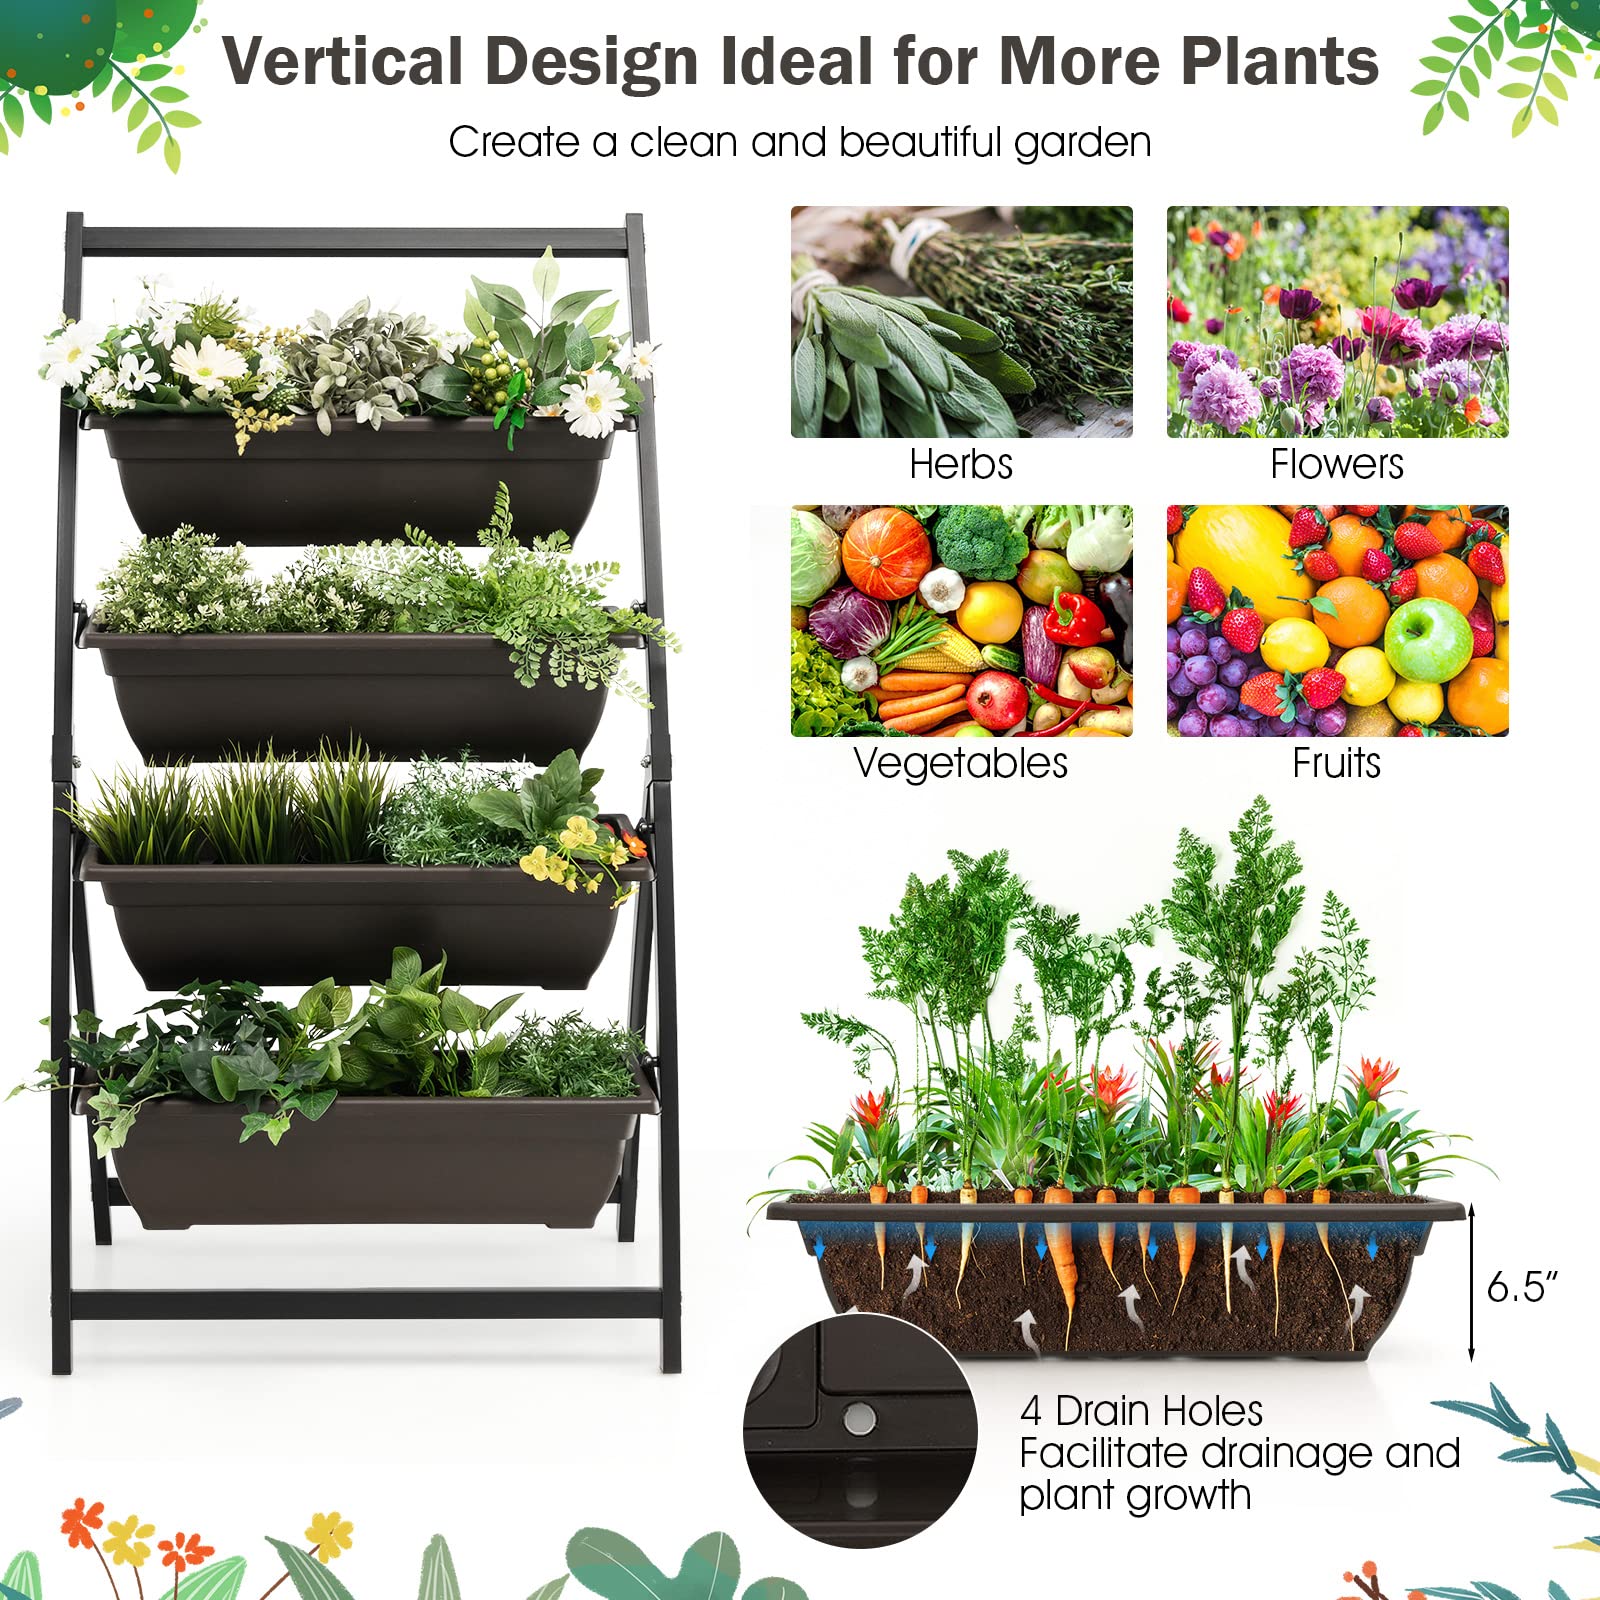 Giantex 2 Pcs 4.1FT Vertical Raised Garden Bed, 4-Tier Elevated Planter Box